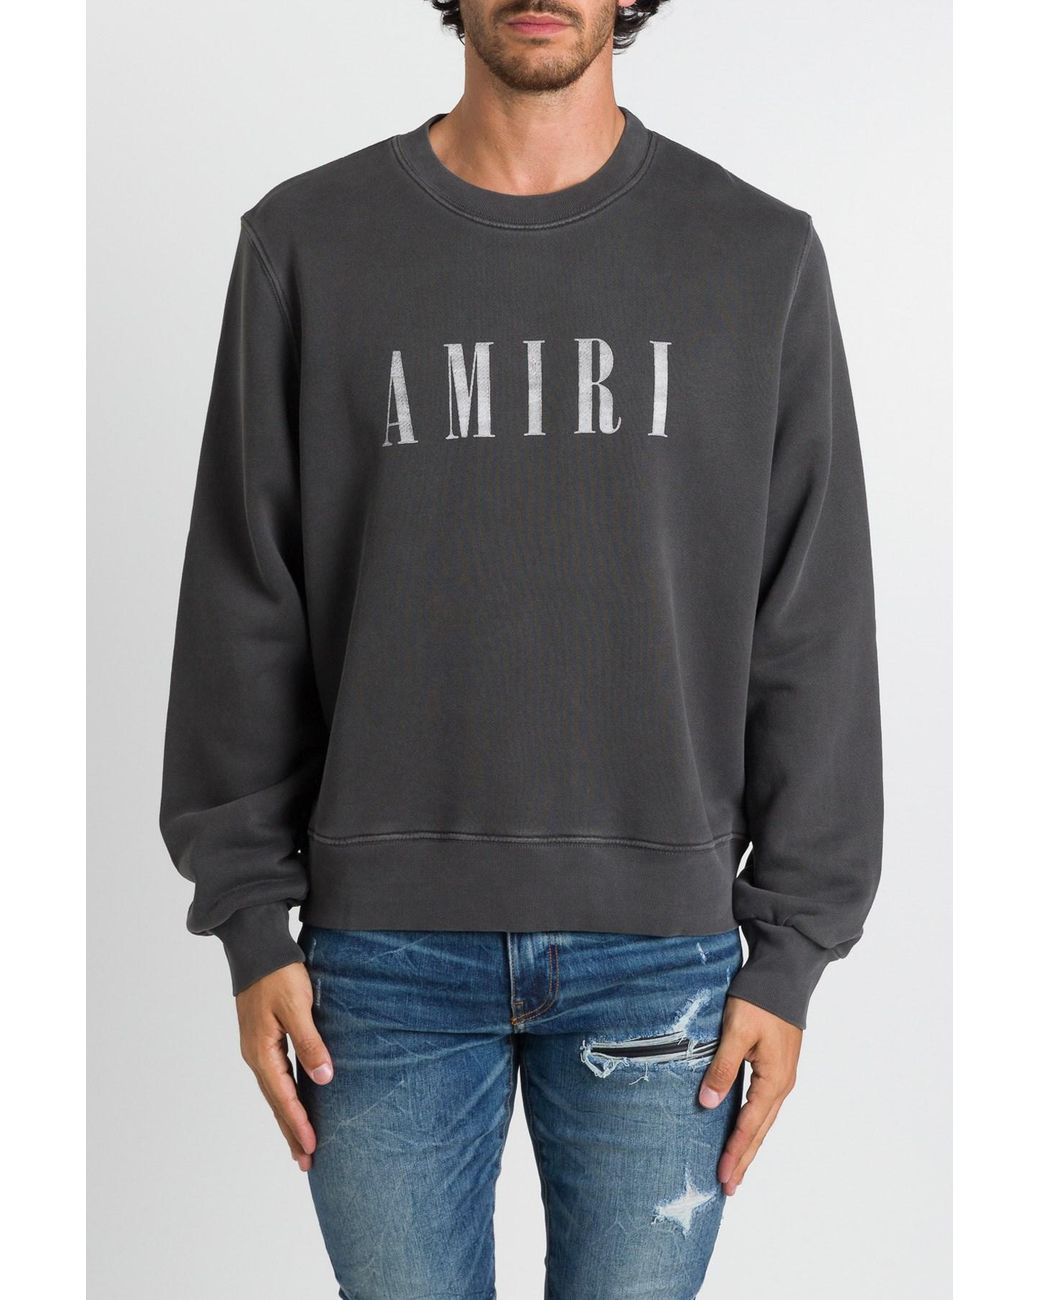 Amiri Logo Sweatshirt in Gray for Men - Lyst